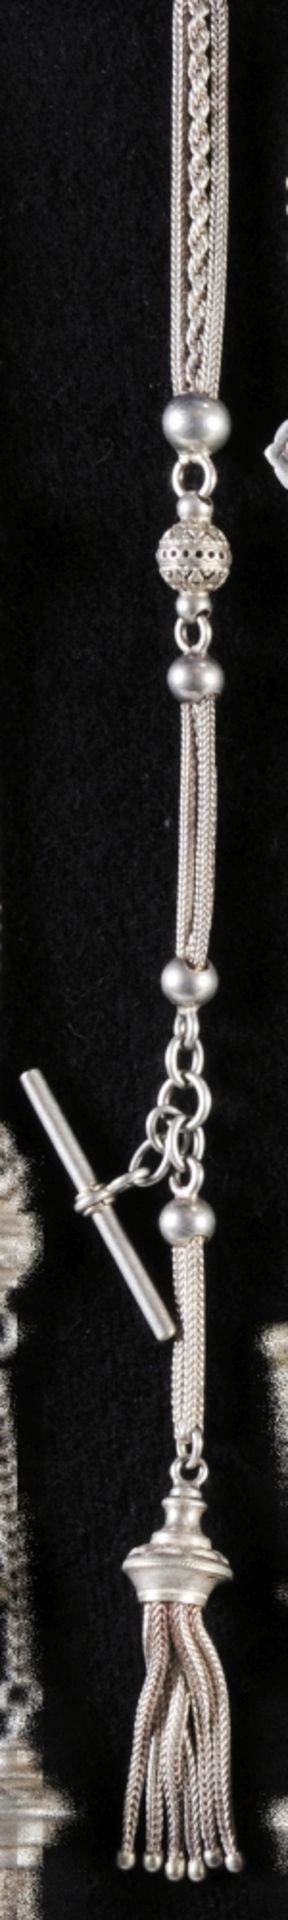 Silver Pocket Watch Chain